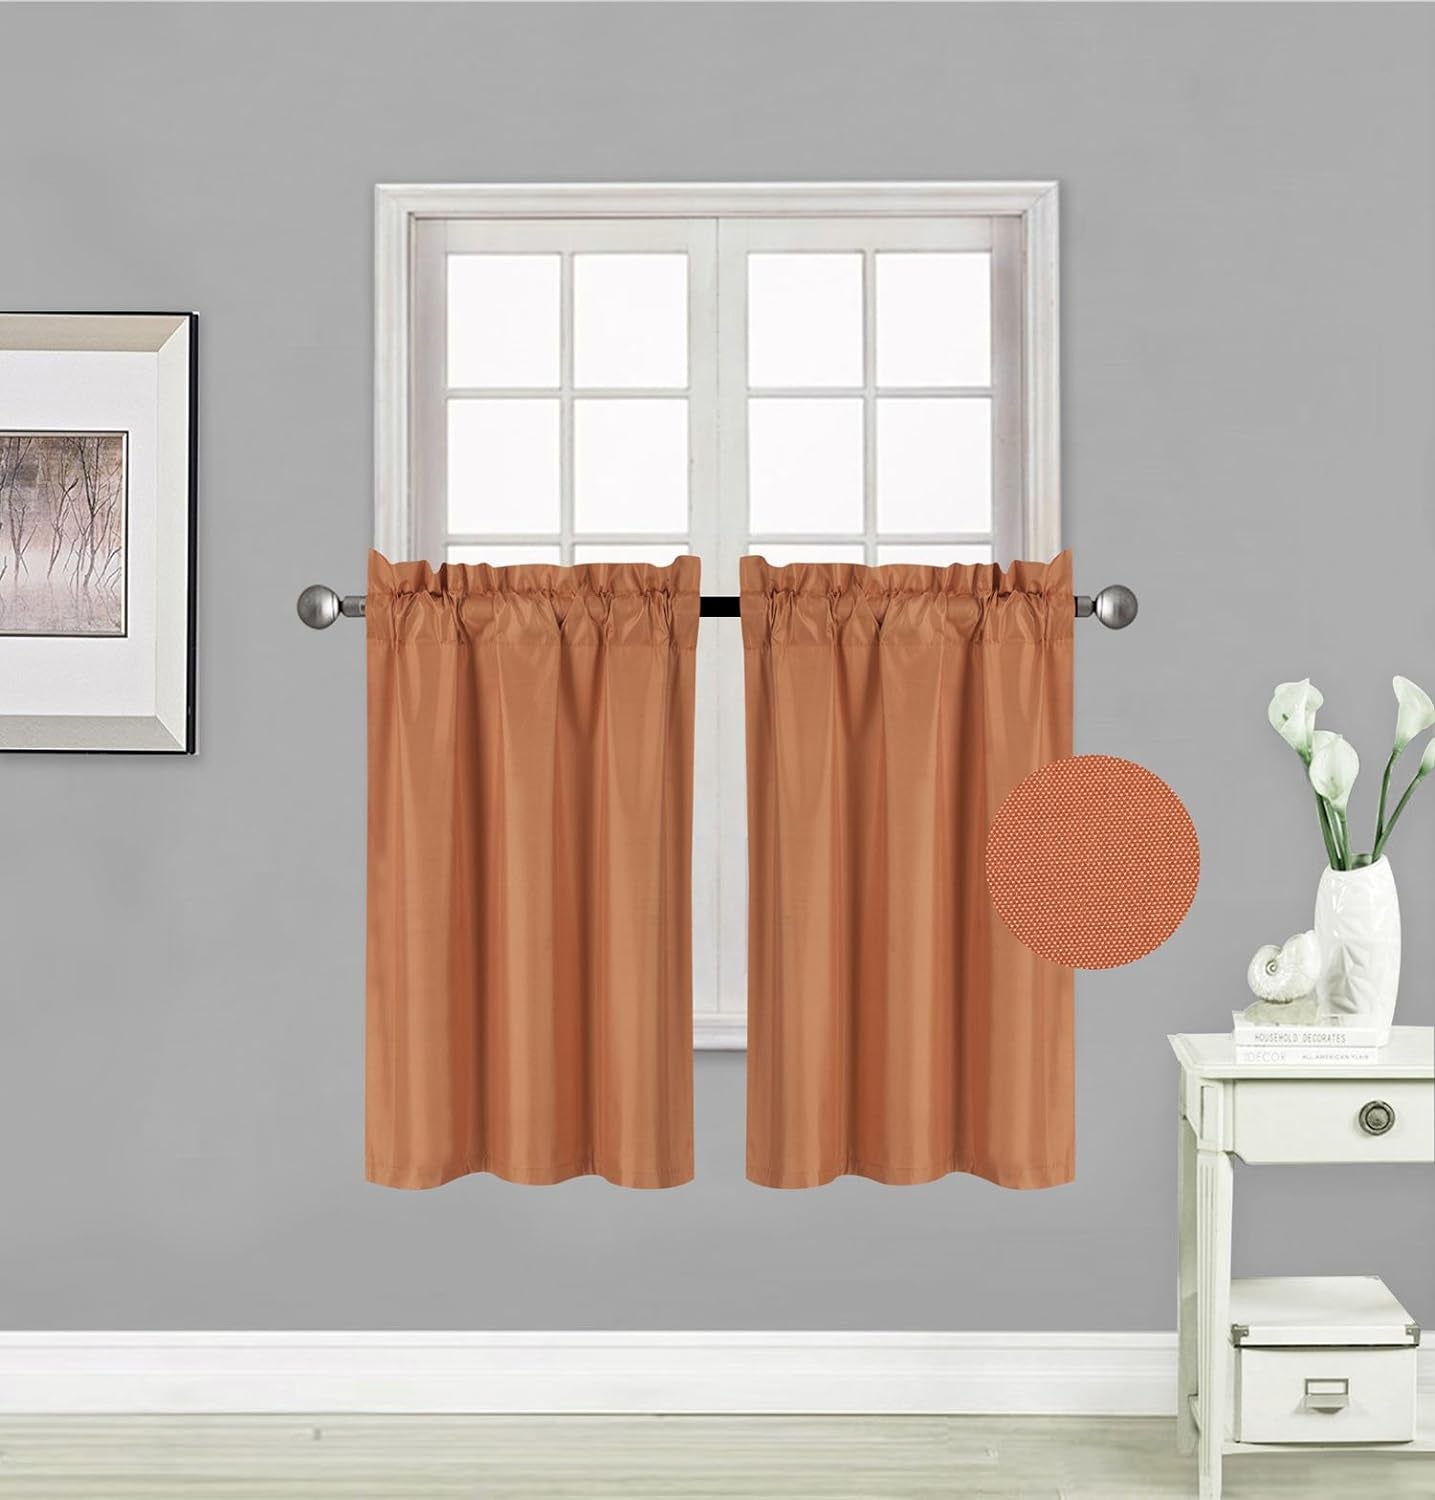 Elegant Home 2 Short Panels Tiers Small Window Treatment Curtain Blackout 28" W X 36" L Each for Kitchen Bathroom # R5  Elegant Home Decor Orange  